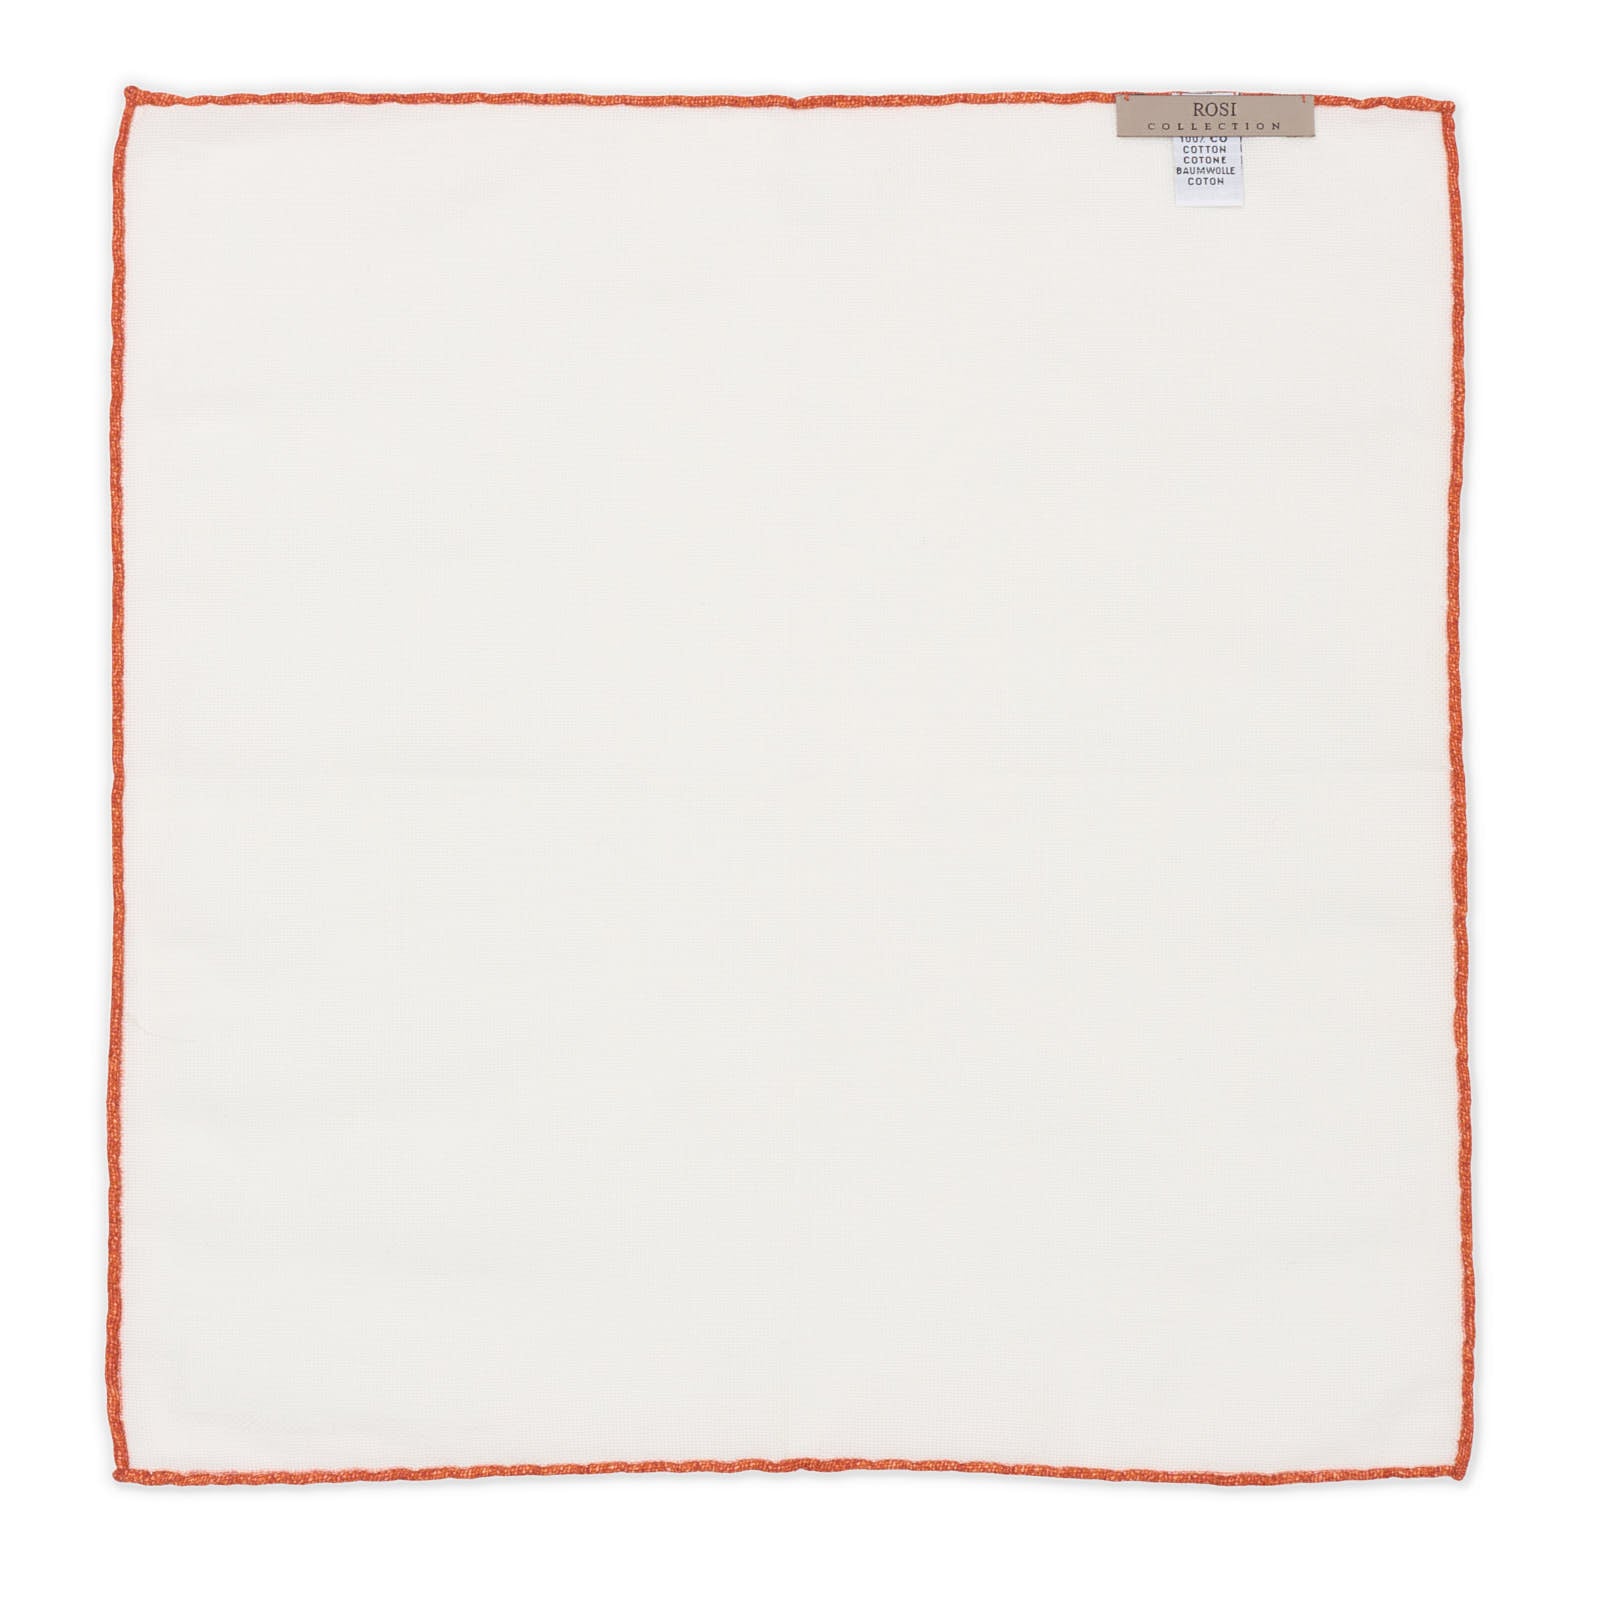 ROSI Handmade White-Orange Solid Cotton Pocket Square NEW 31cm x 31cm